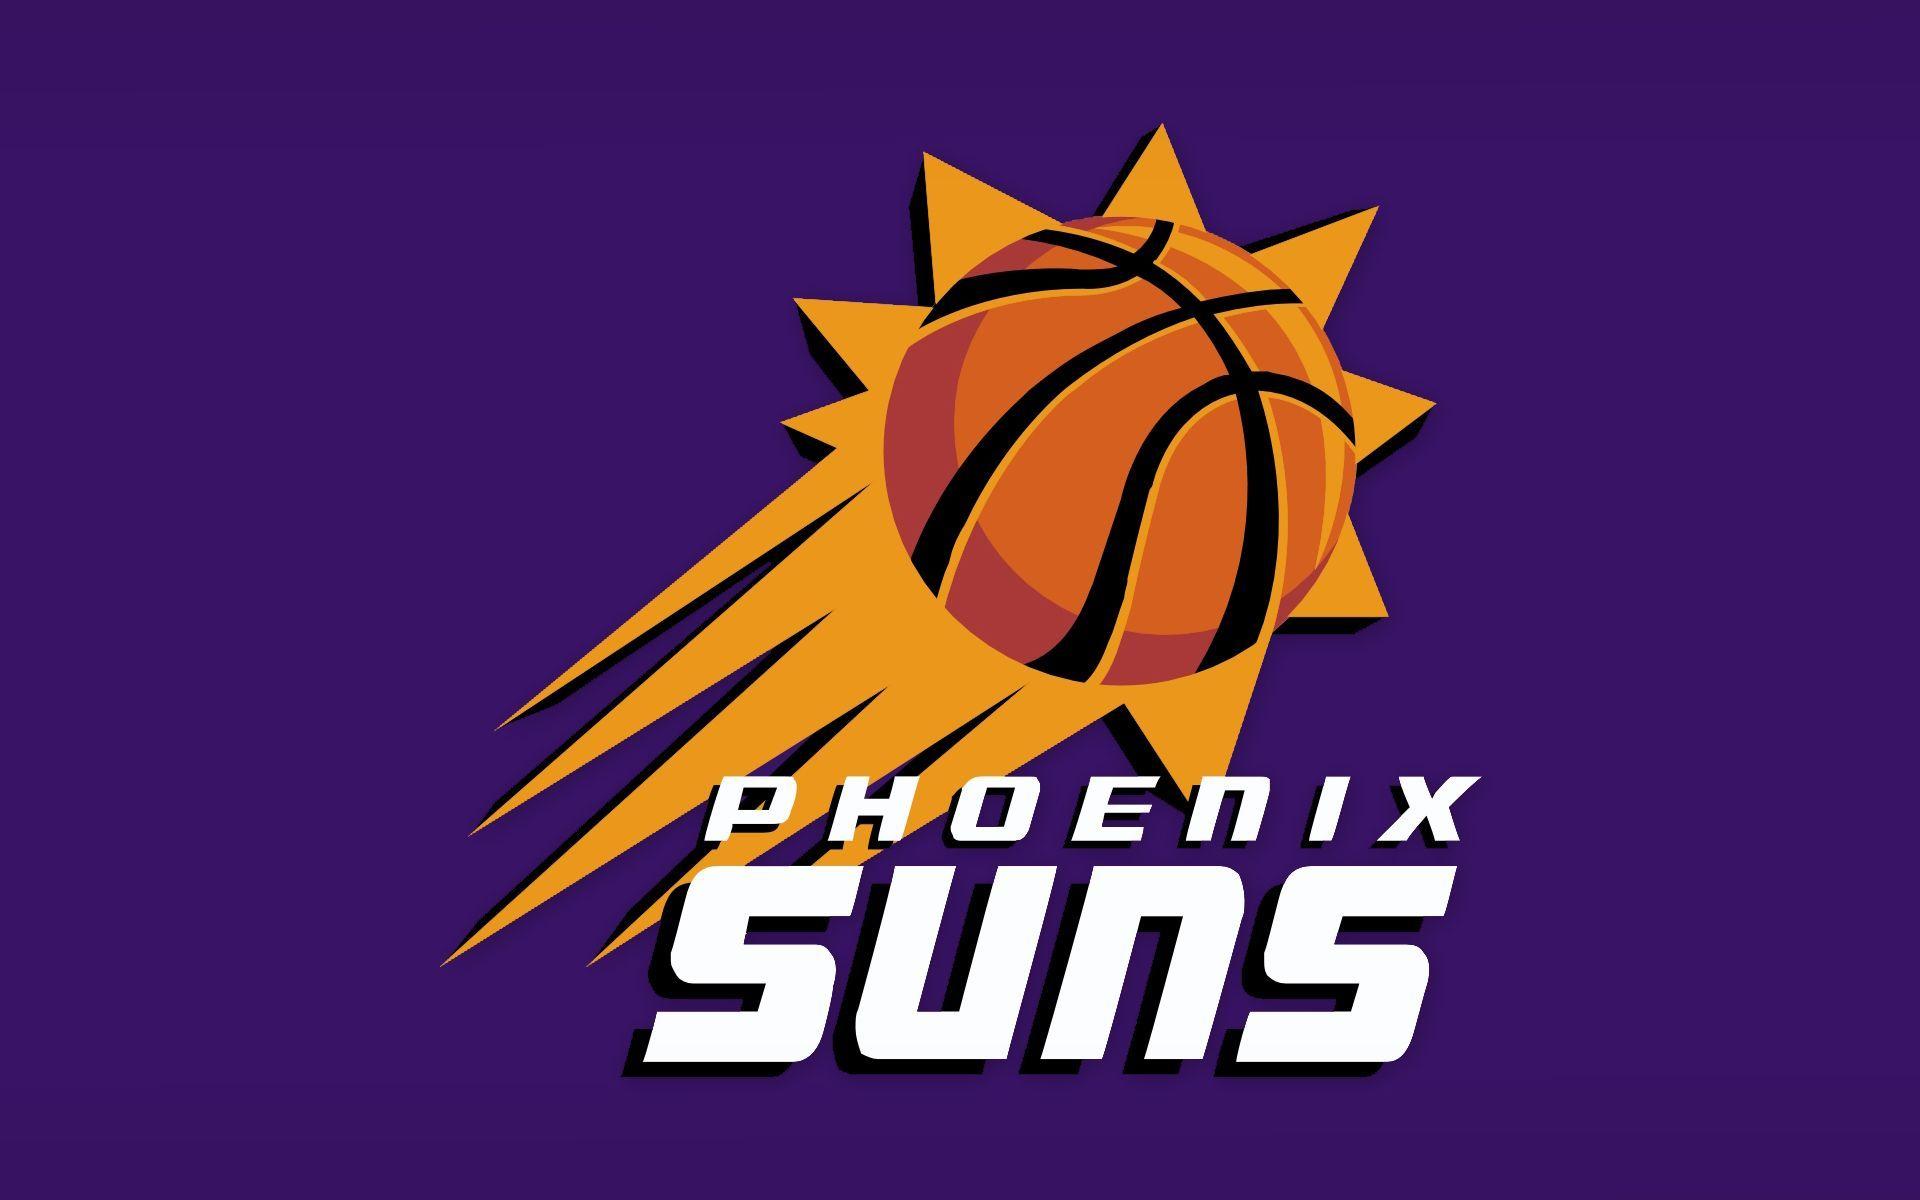 NBA Phoenix Suns Logo Team wallpapers HD 2016 in Basketball